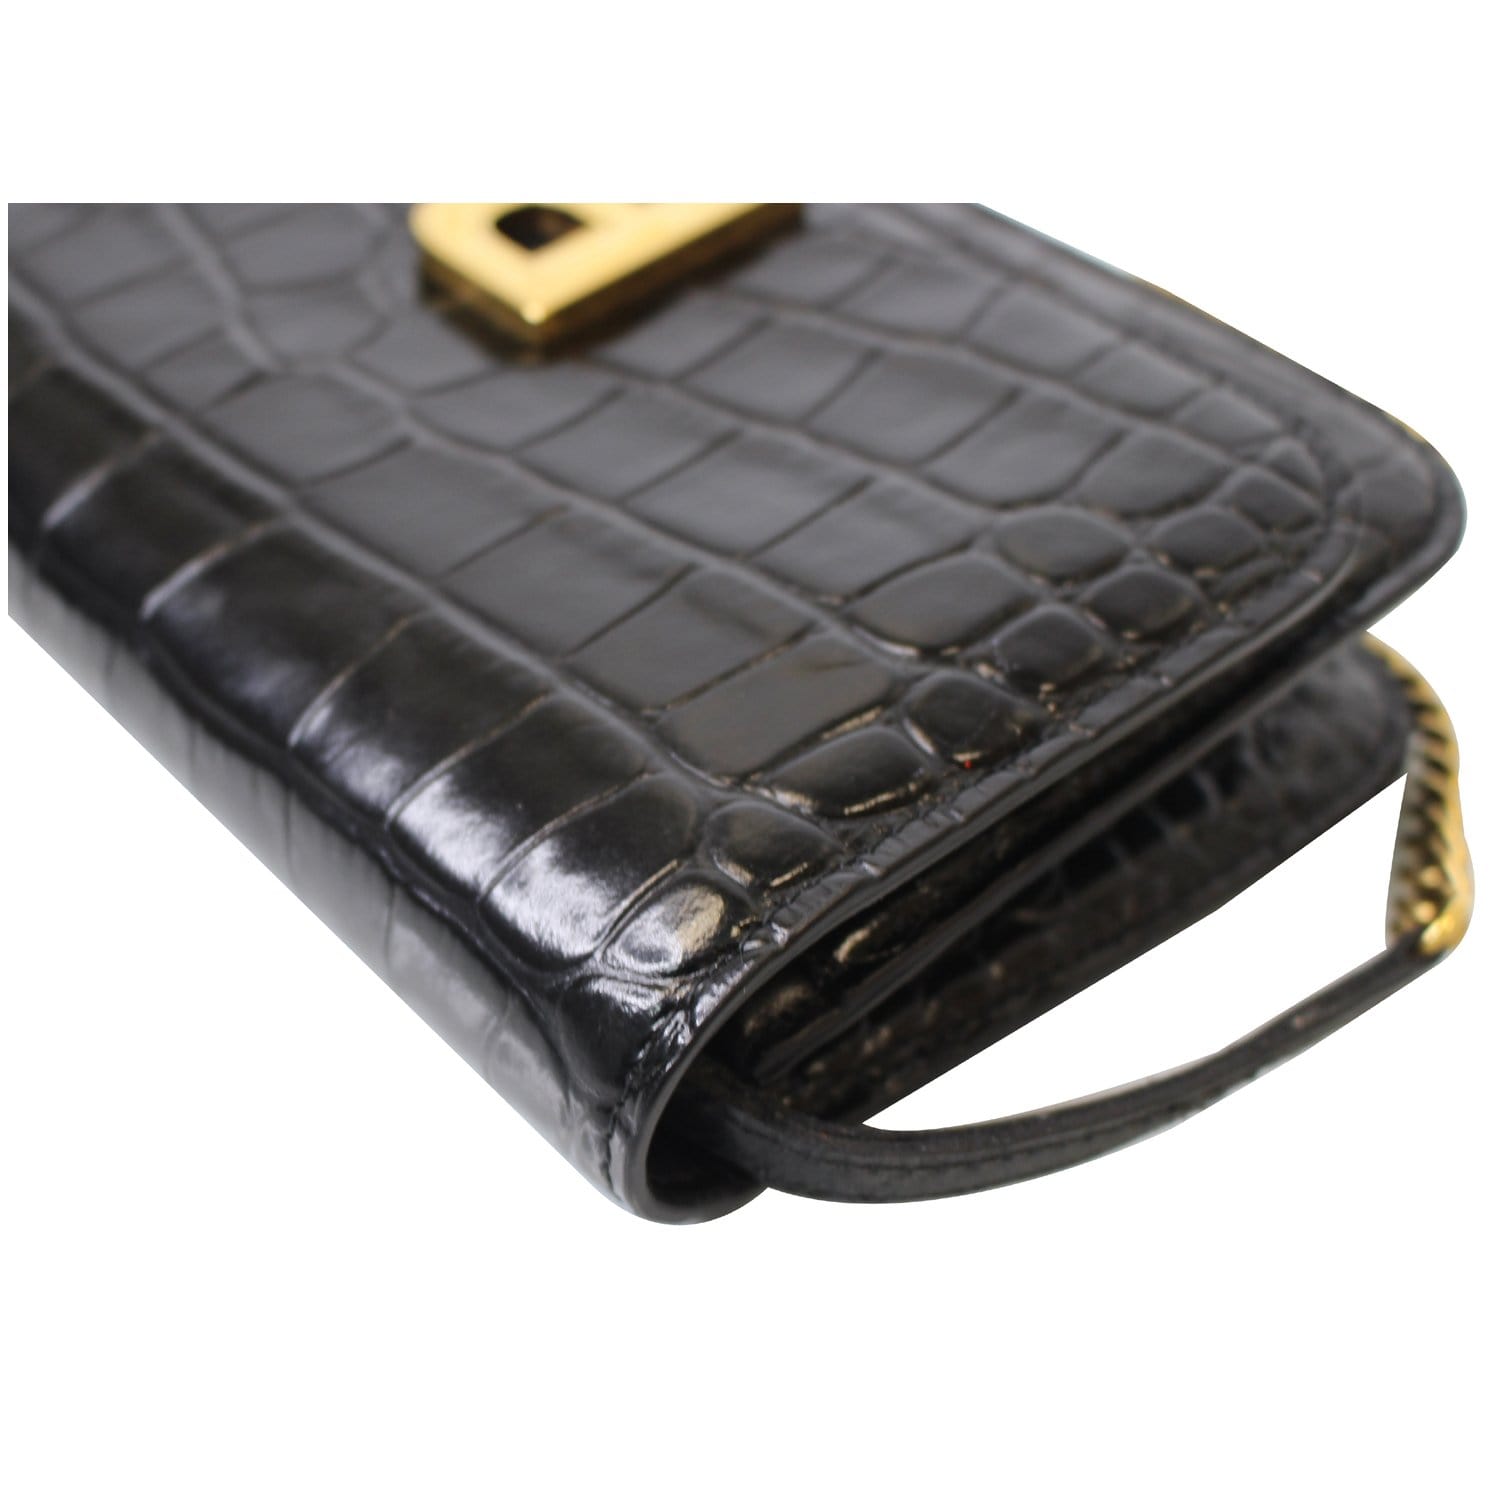 Classic metalic patent leather handbag Balenciaga Black in Patent